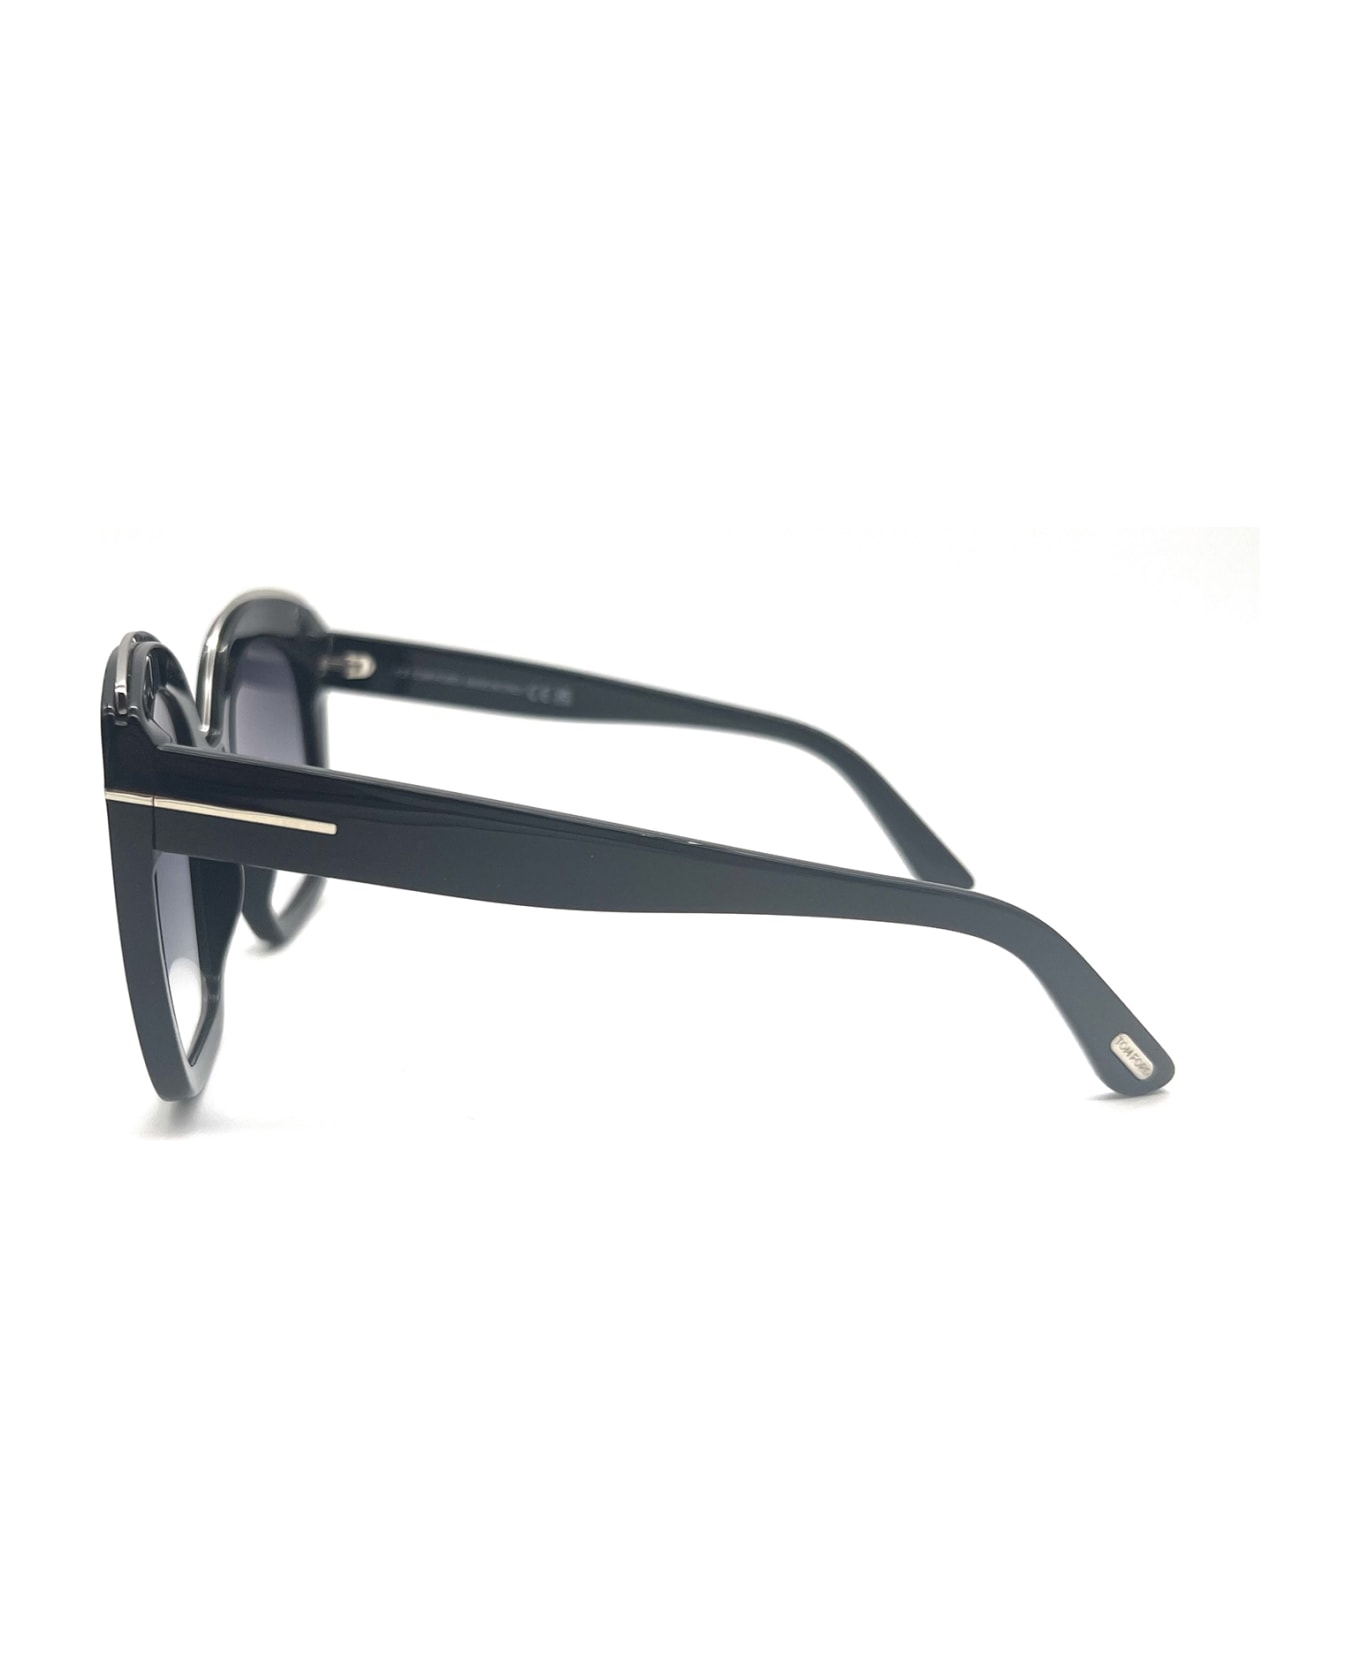 Tom Ford Eyewear FT0944 Sunglasses - B